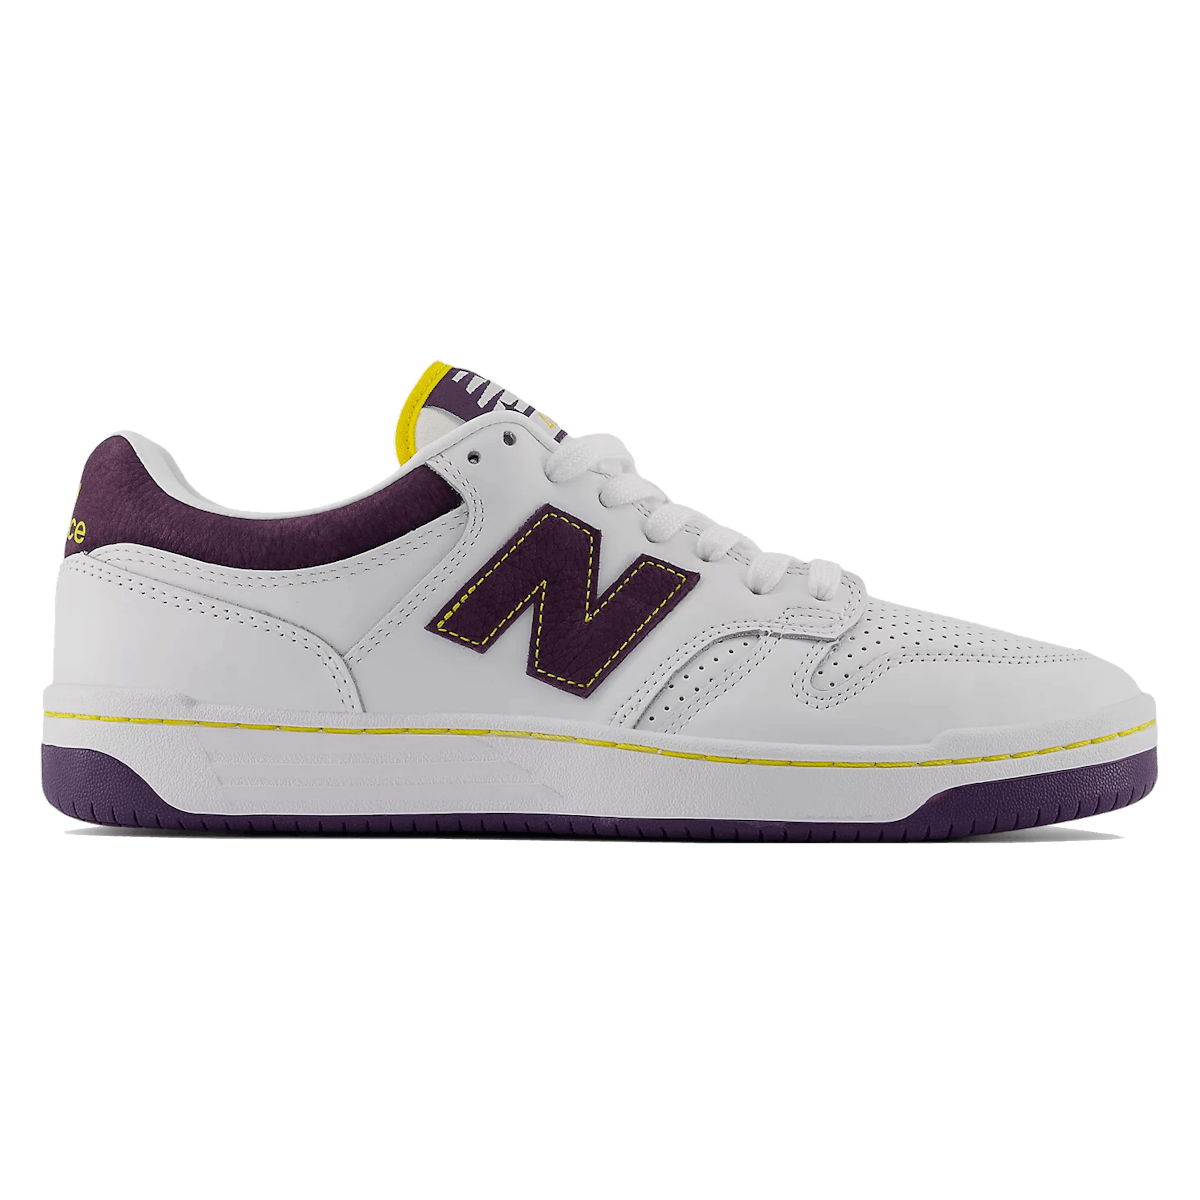 New Balance Numeric 480 "White Purple"